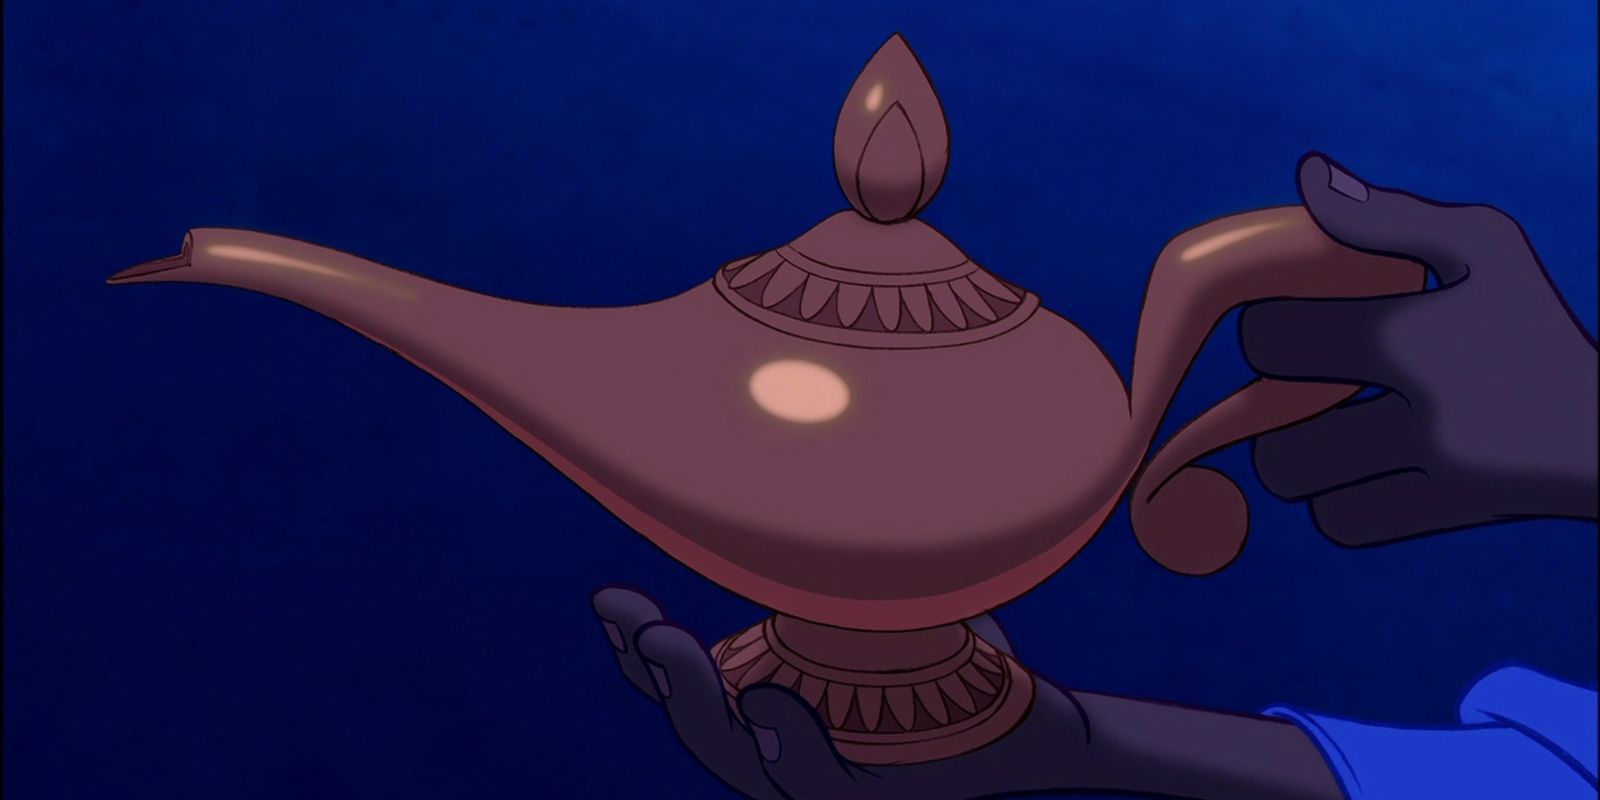 I Nightmare of Genie. Disney's “Aladdin!” is a staple of…